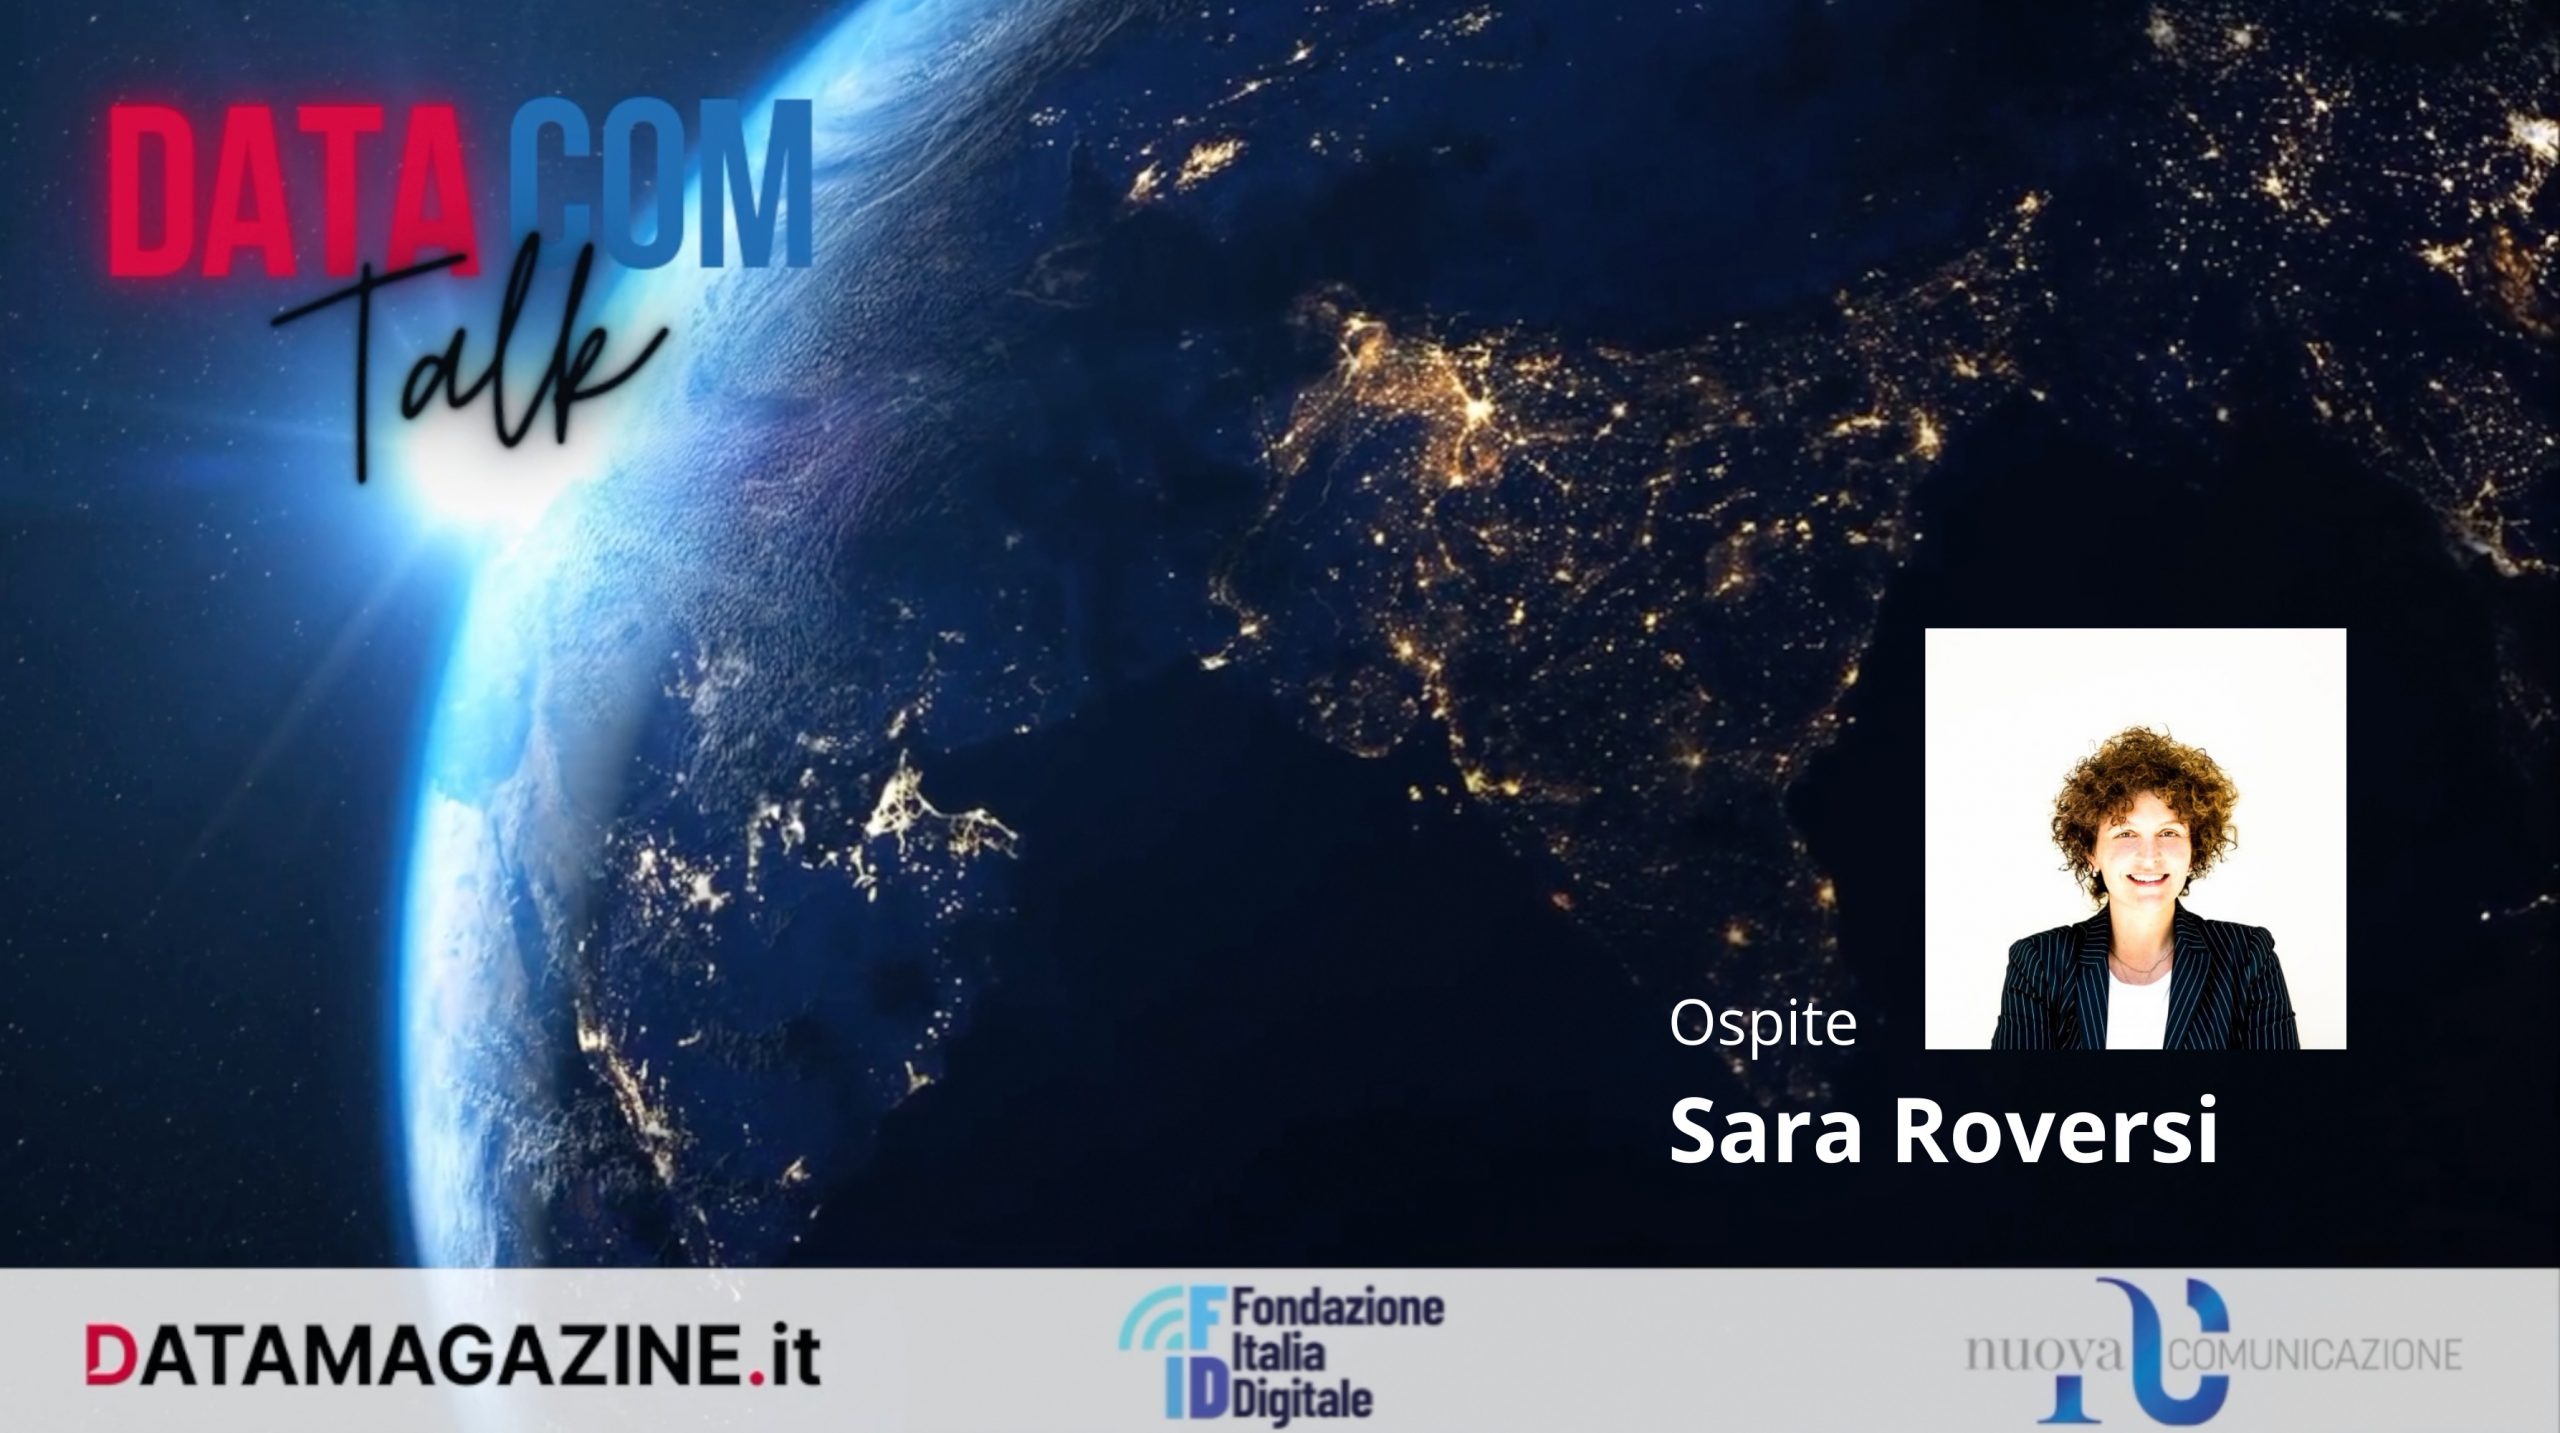 DataCom Talk – Sara Roversi